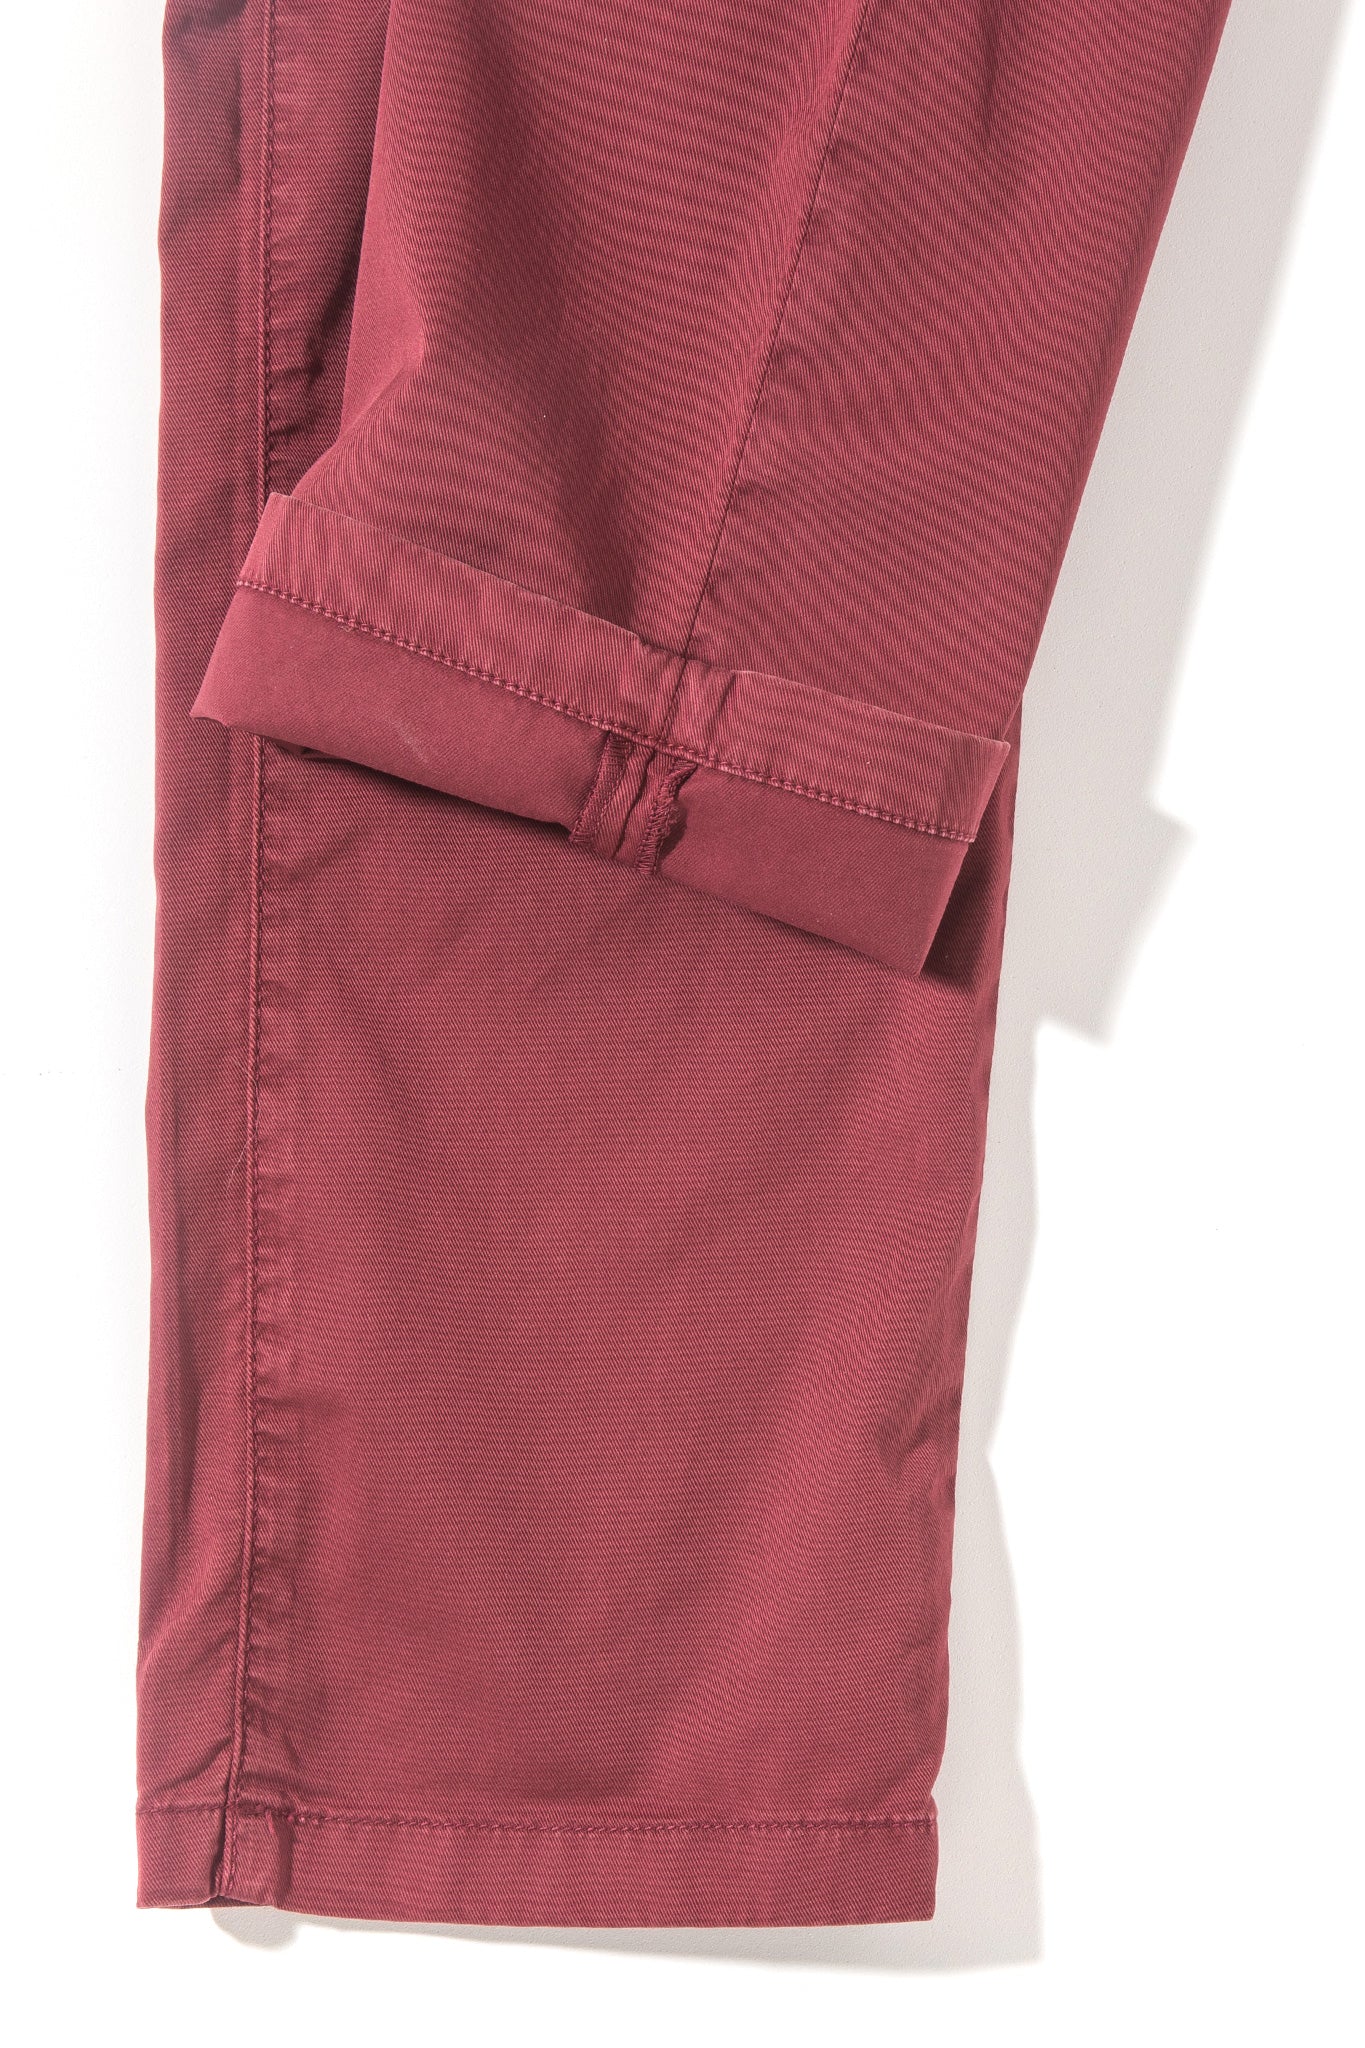 Tempe 4 Pocket In Bordeaux | Mens - Pants - 4 Pocket | Axels Premium Denim